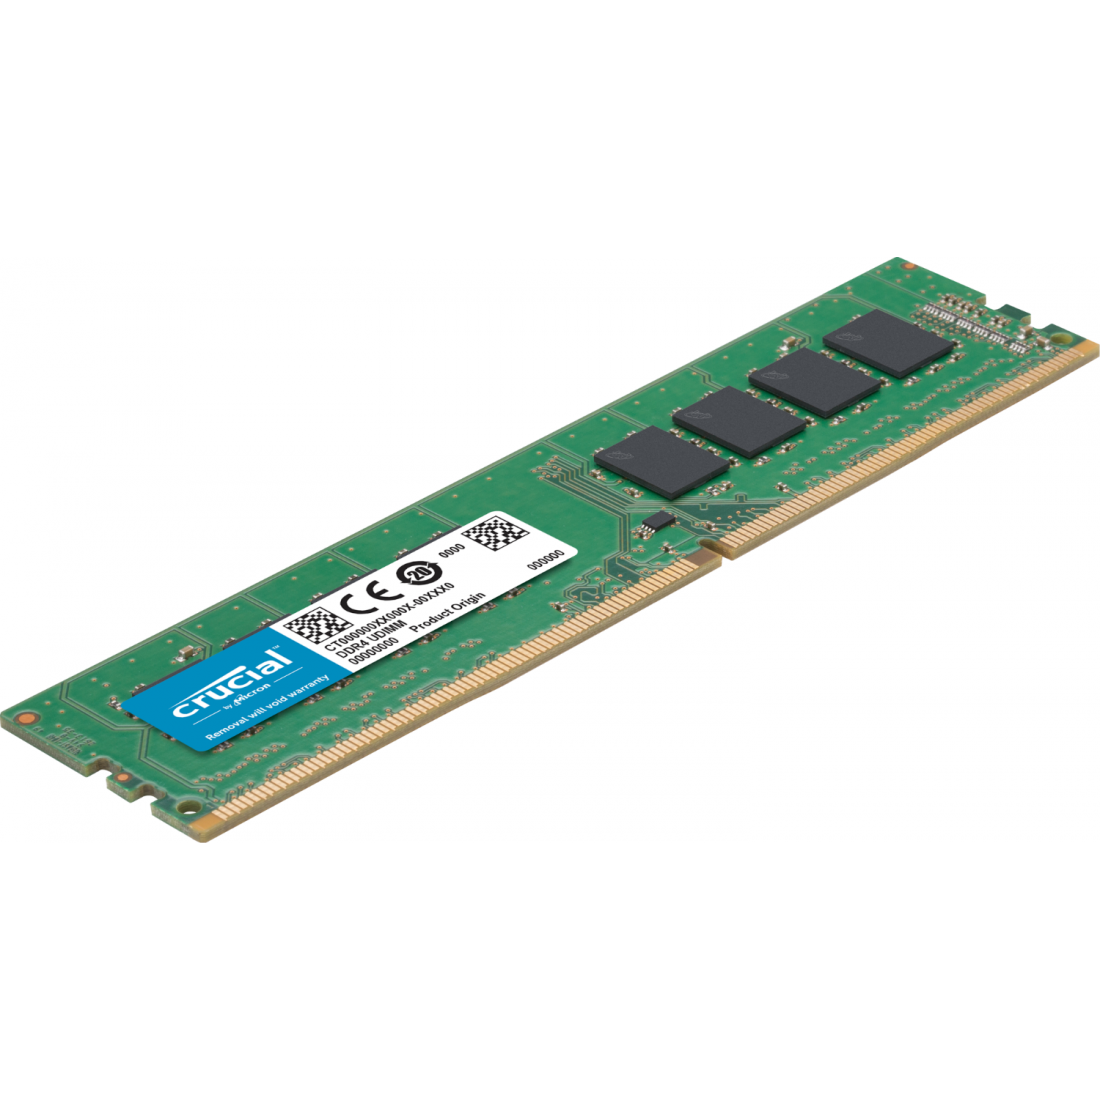 Crucial CT16G4DFRA32A RAM, 16GB DDR4, 3200MHz, UDIMM - CT8G4DFRA32A